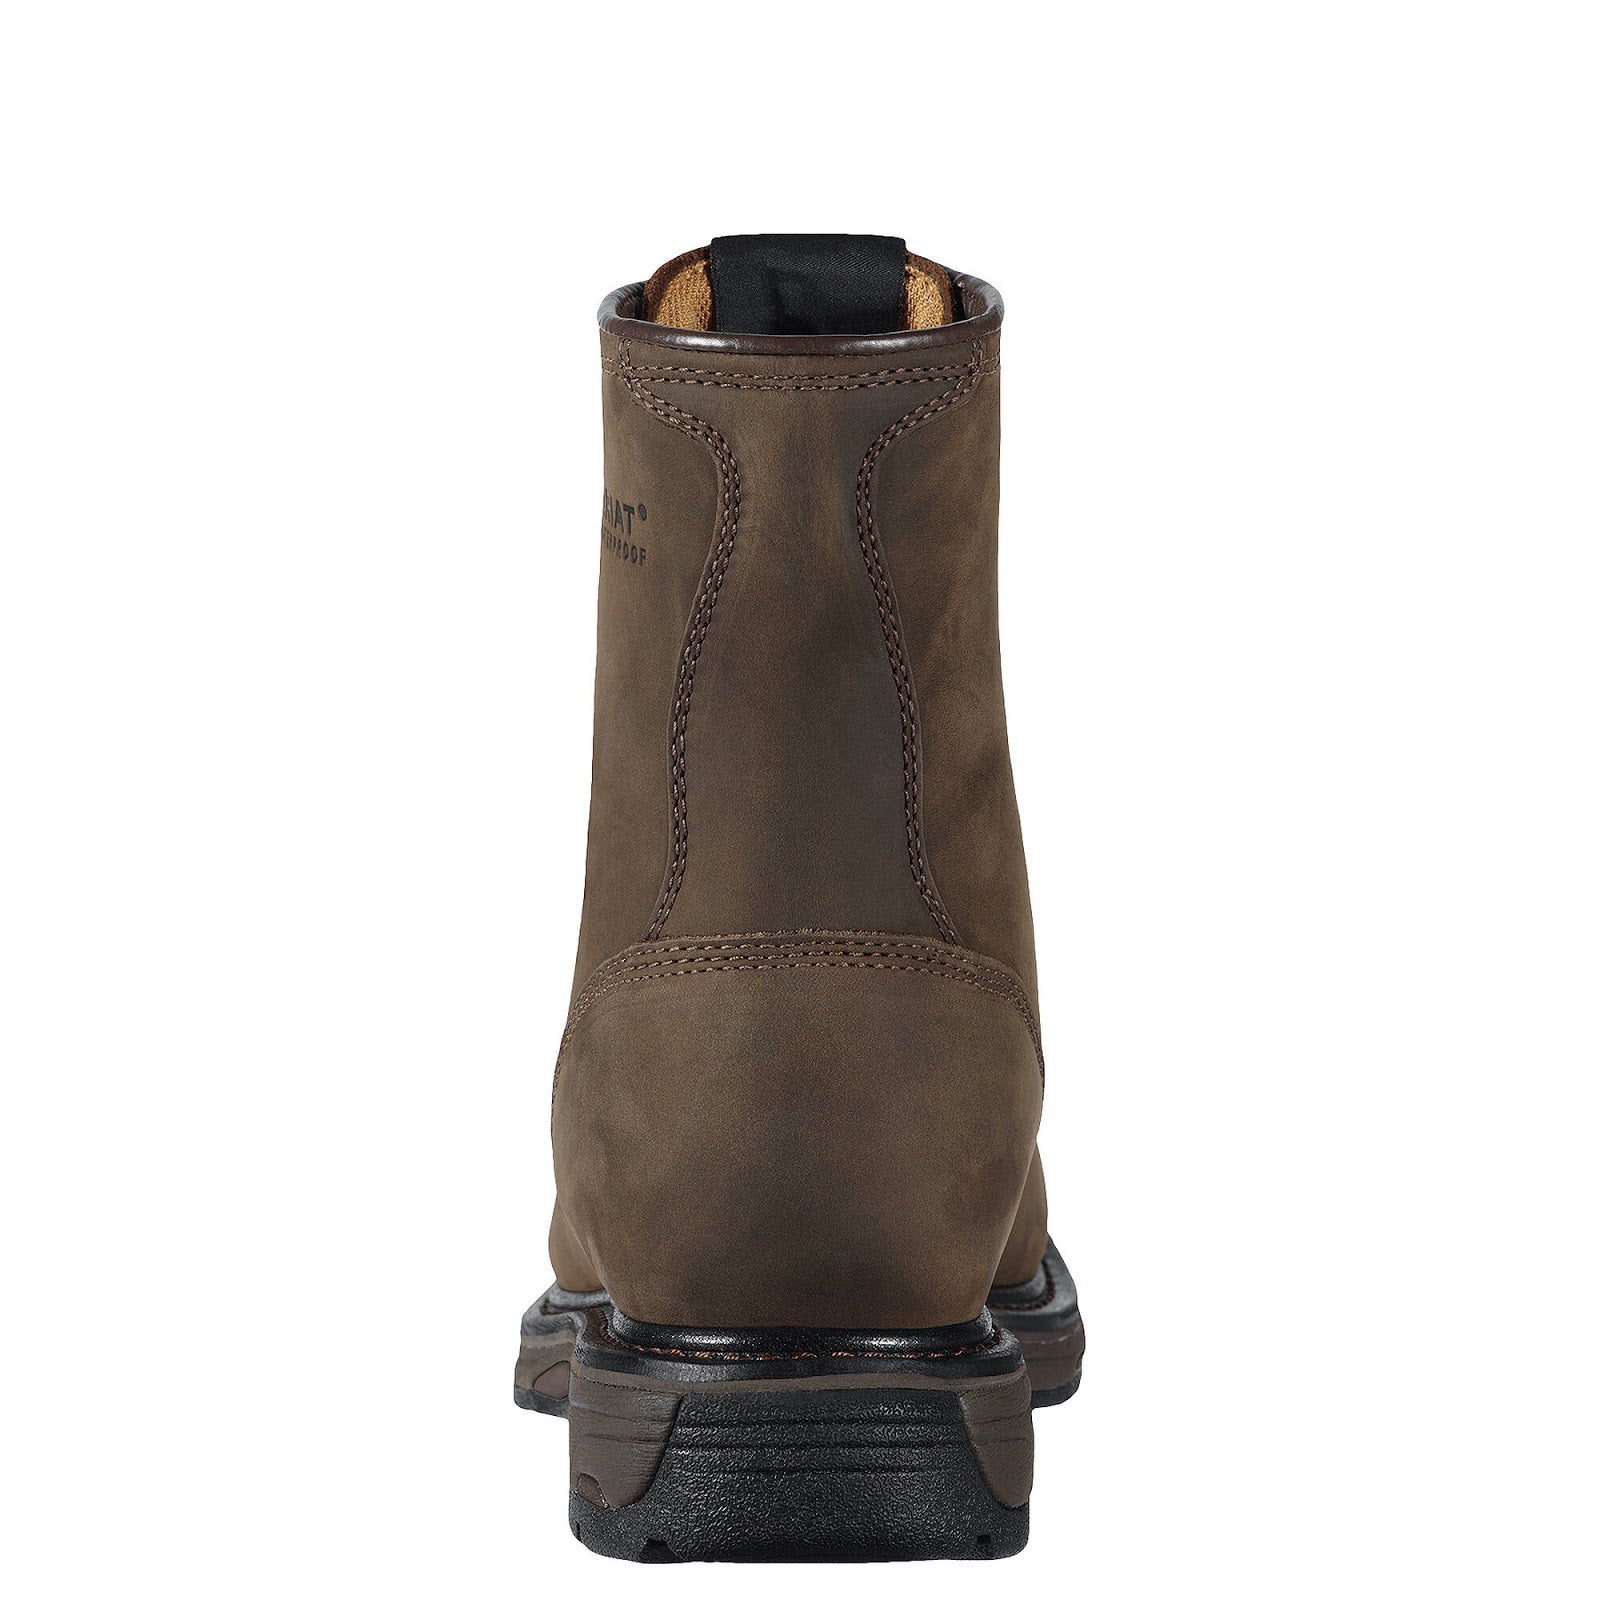 Ariat Workhog 8-inch Waterproof Work Boot